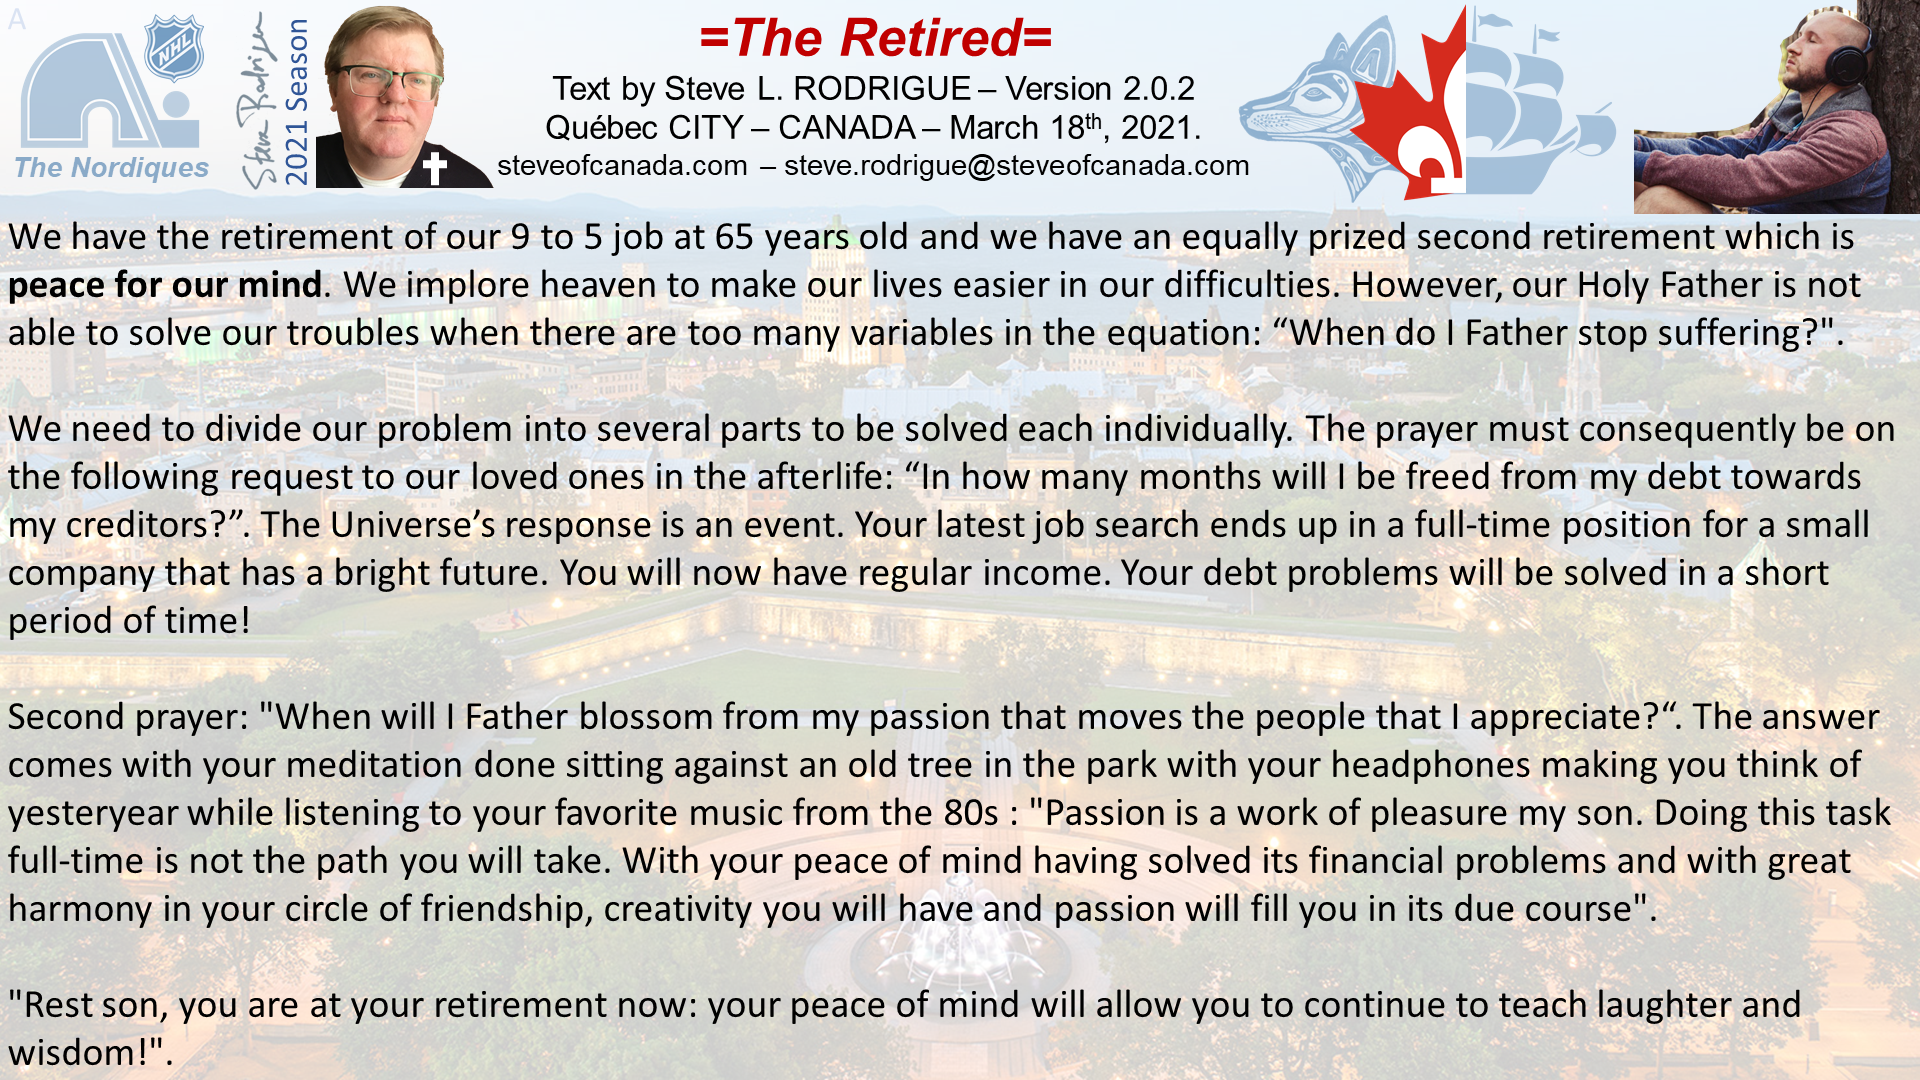 The retirement